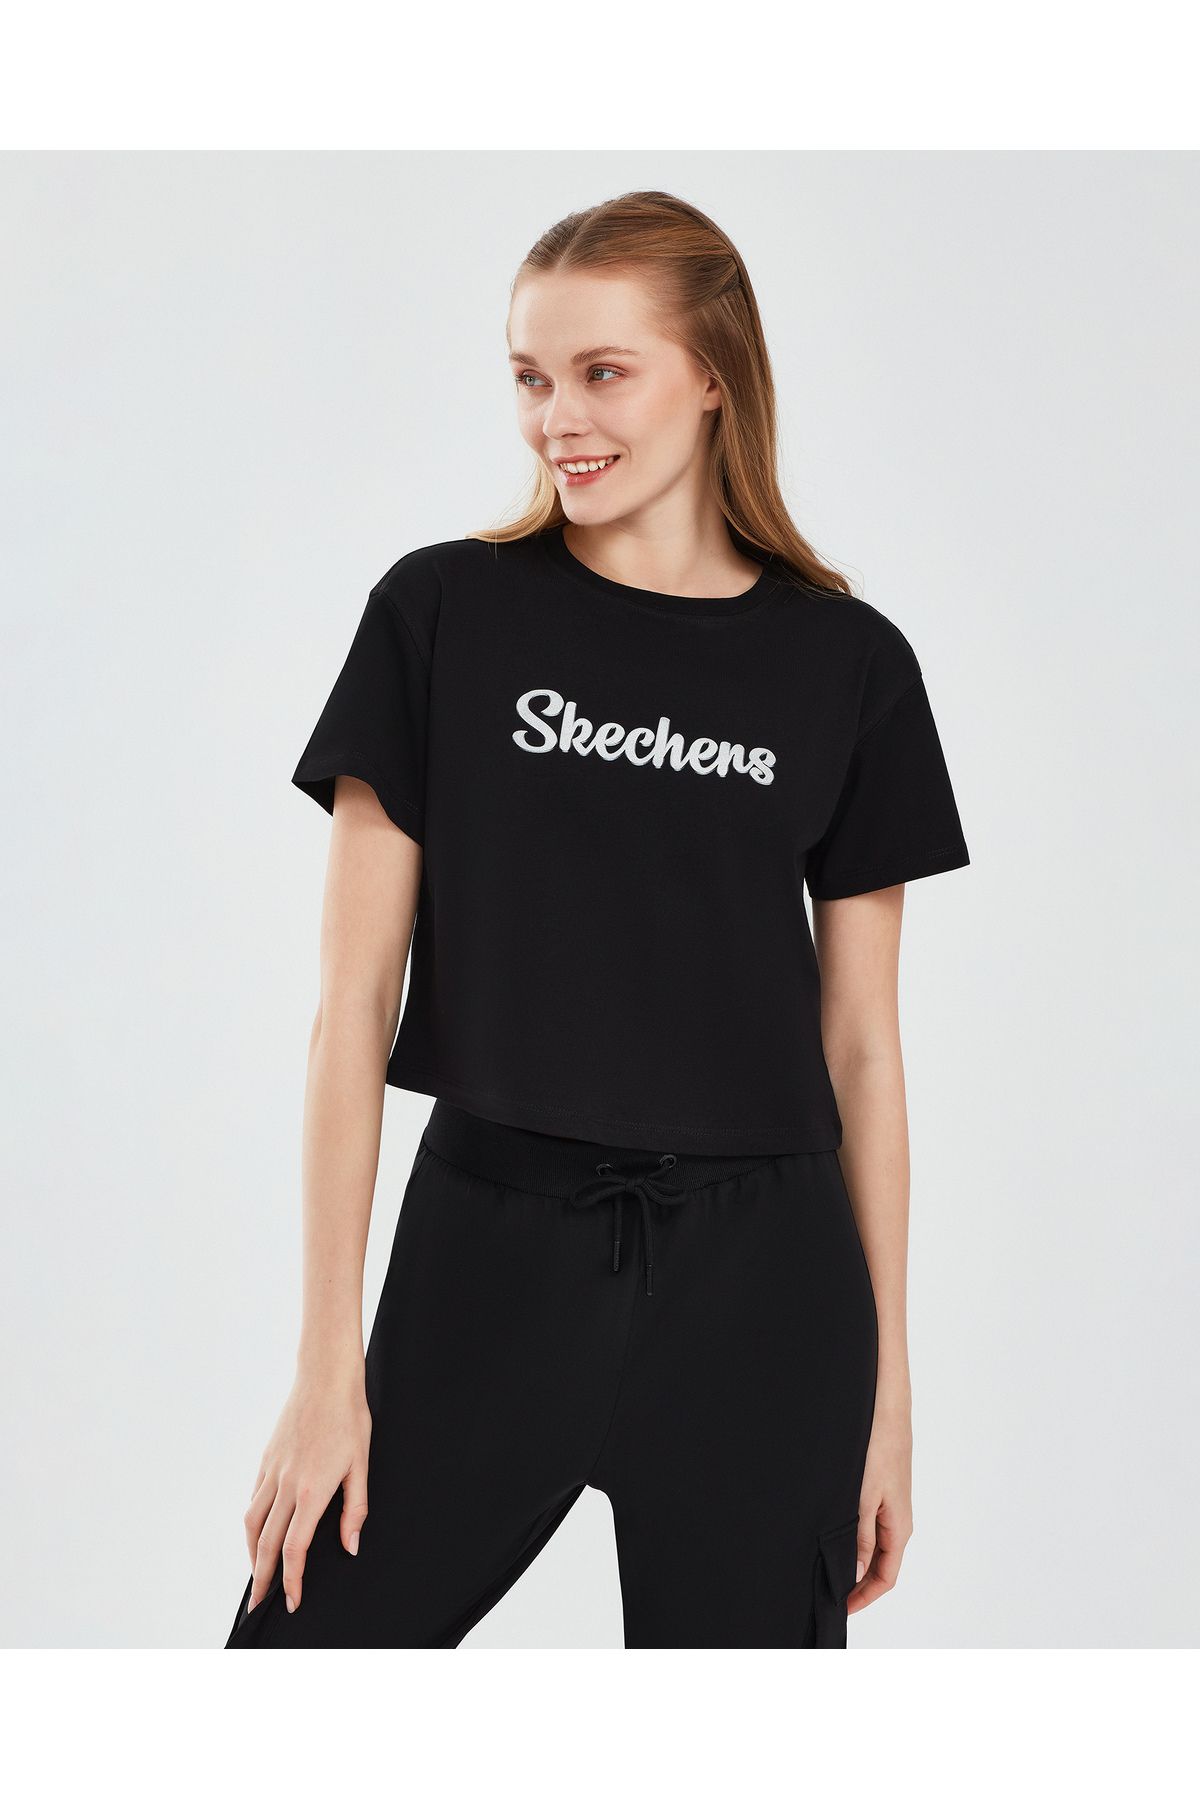 Skechers Graphic T-shirt W Short Sleeve Kadın Siyah Tshirt S241212-001